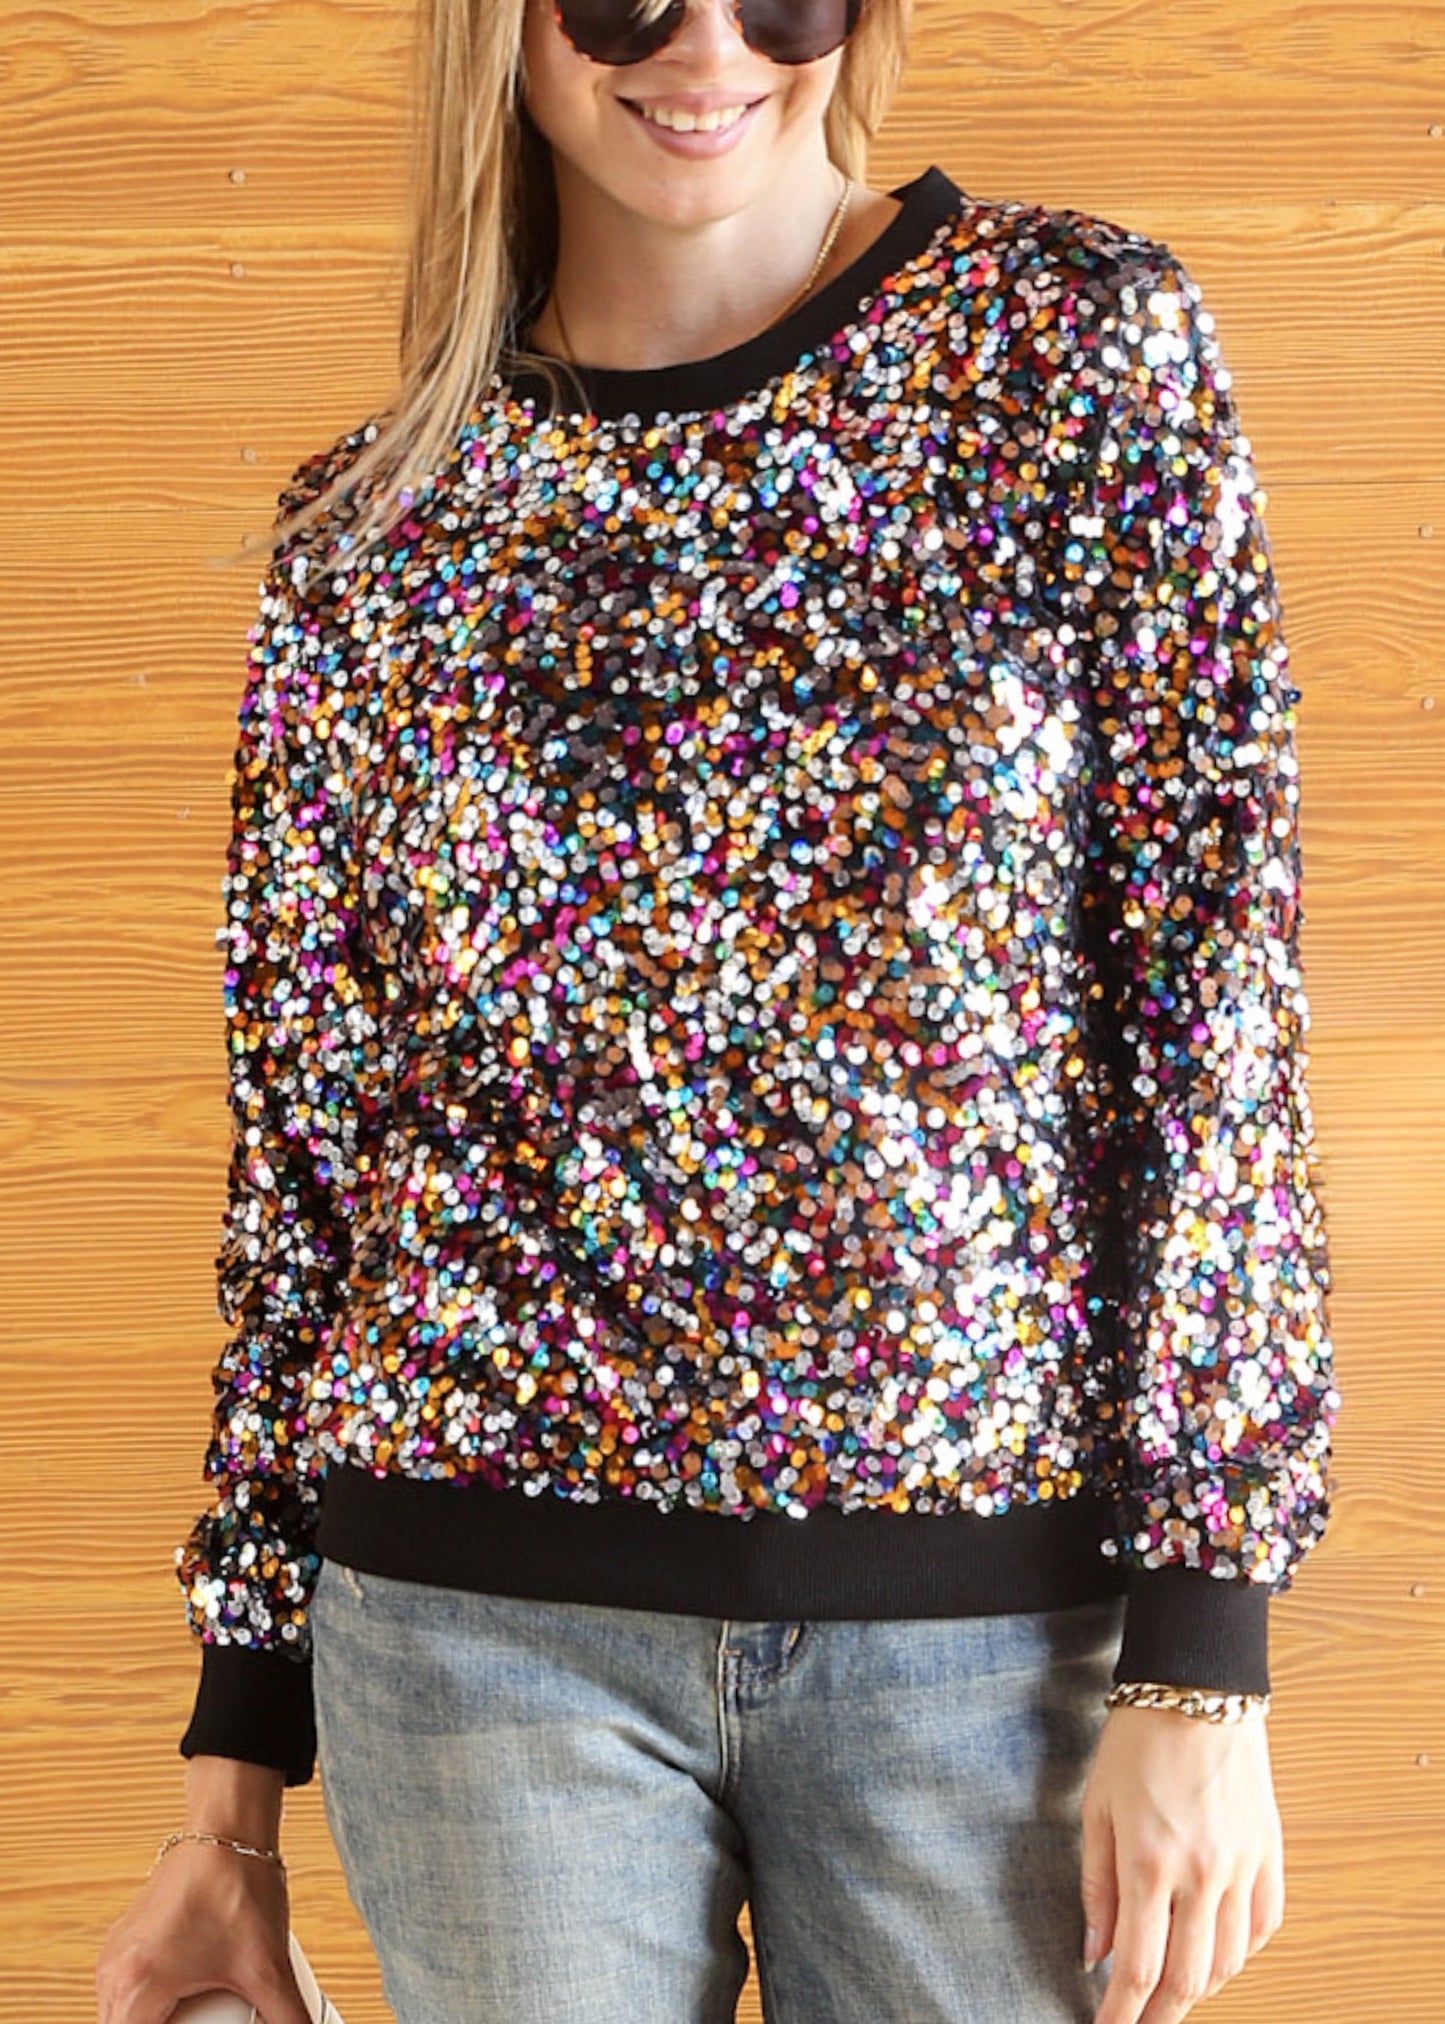 Sequin Long Sleeve Sparkly Pullover Sweatshirt